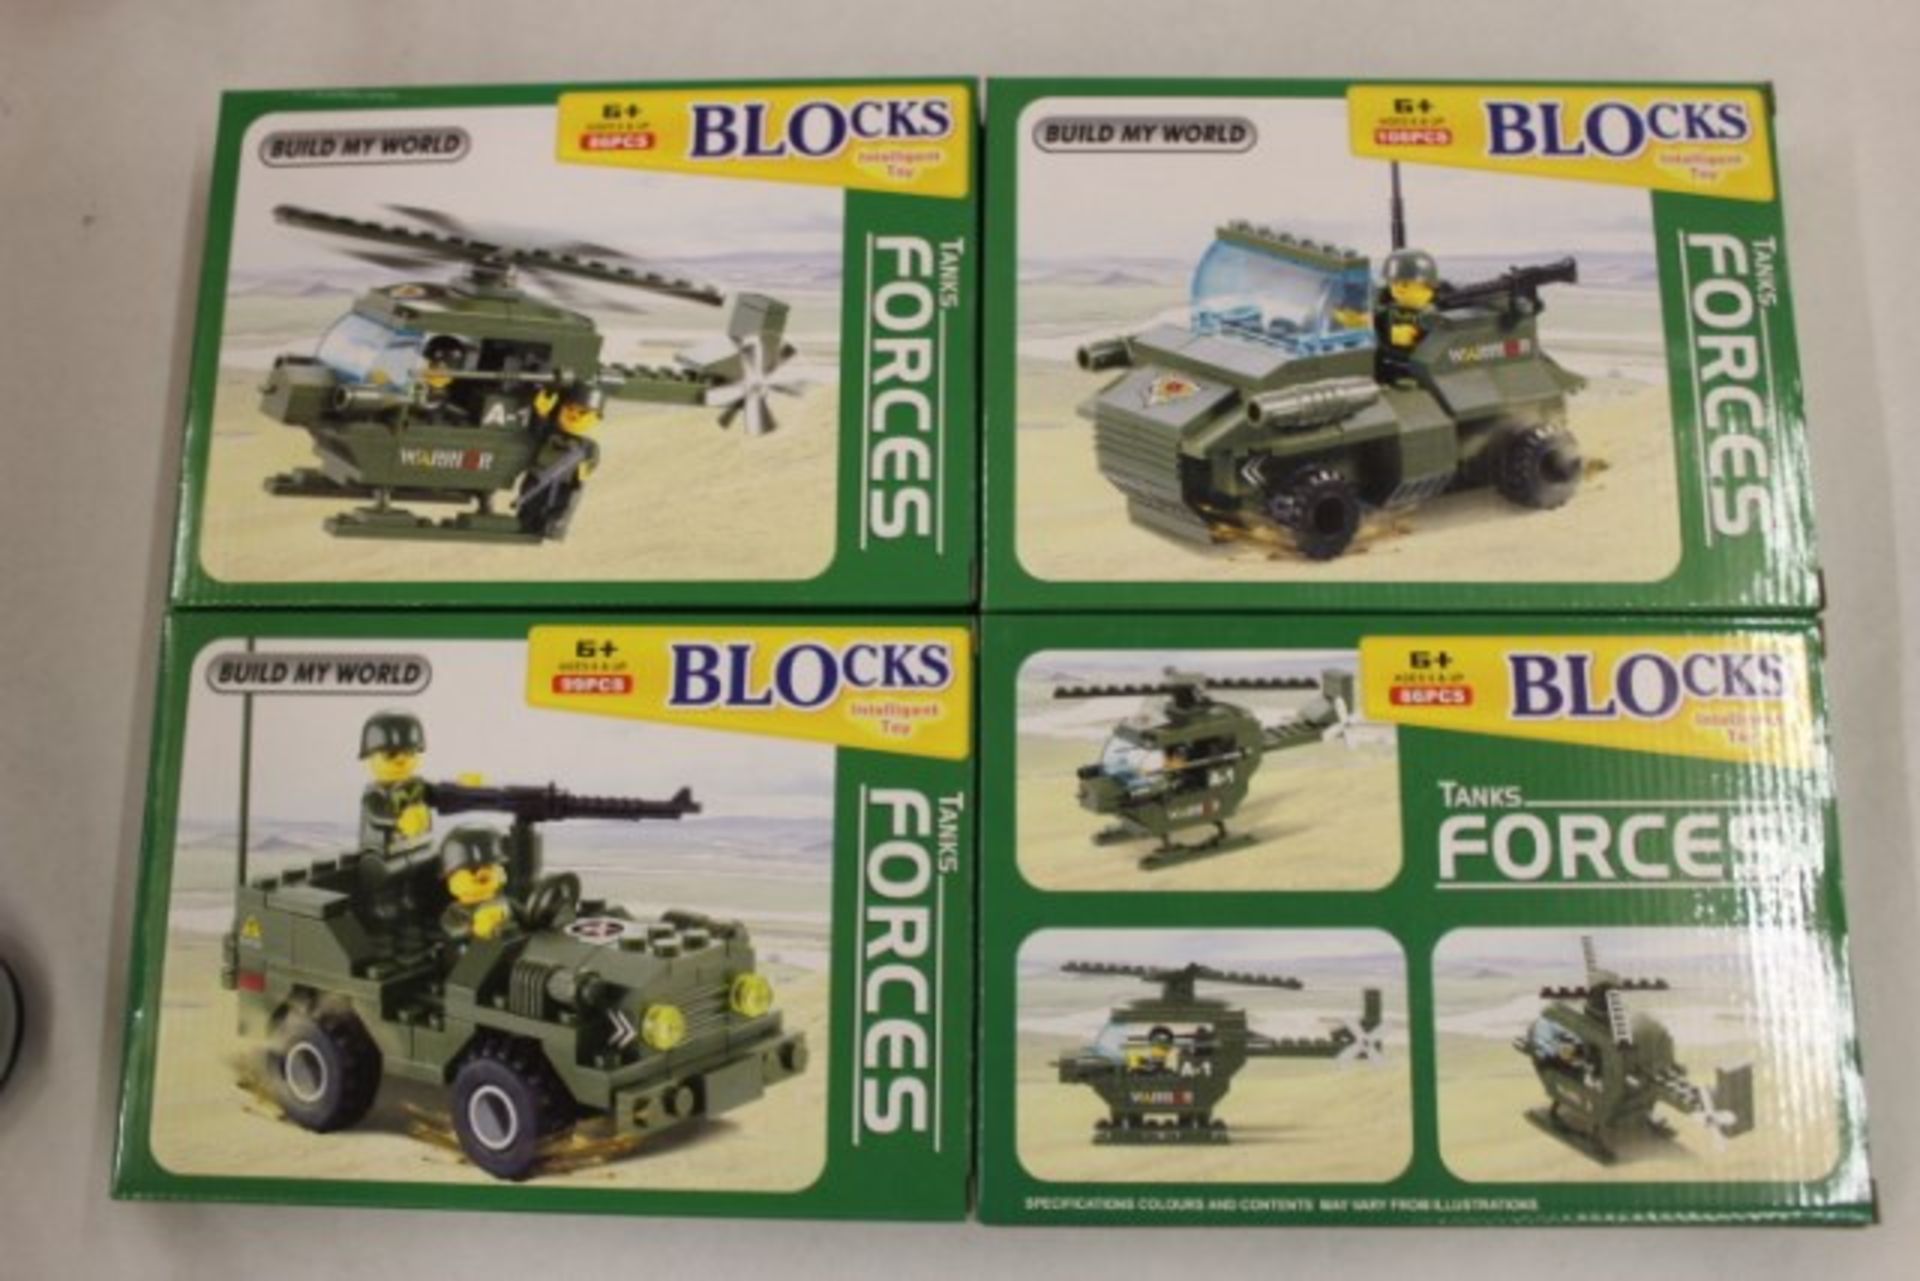 V *TRADE QTY* Brand New 89/99/108pc Army Building Block Kit Intelligent Toy (Similar Lego) X 6 Bid